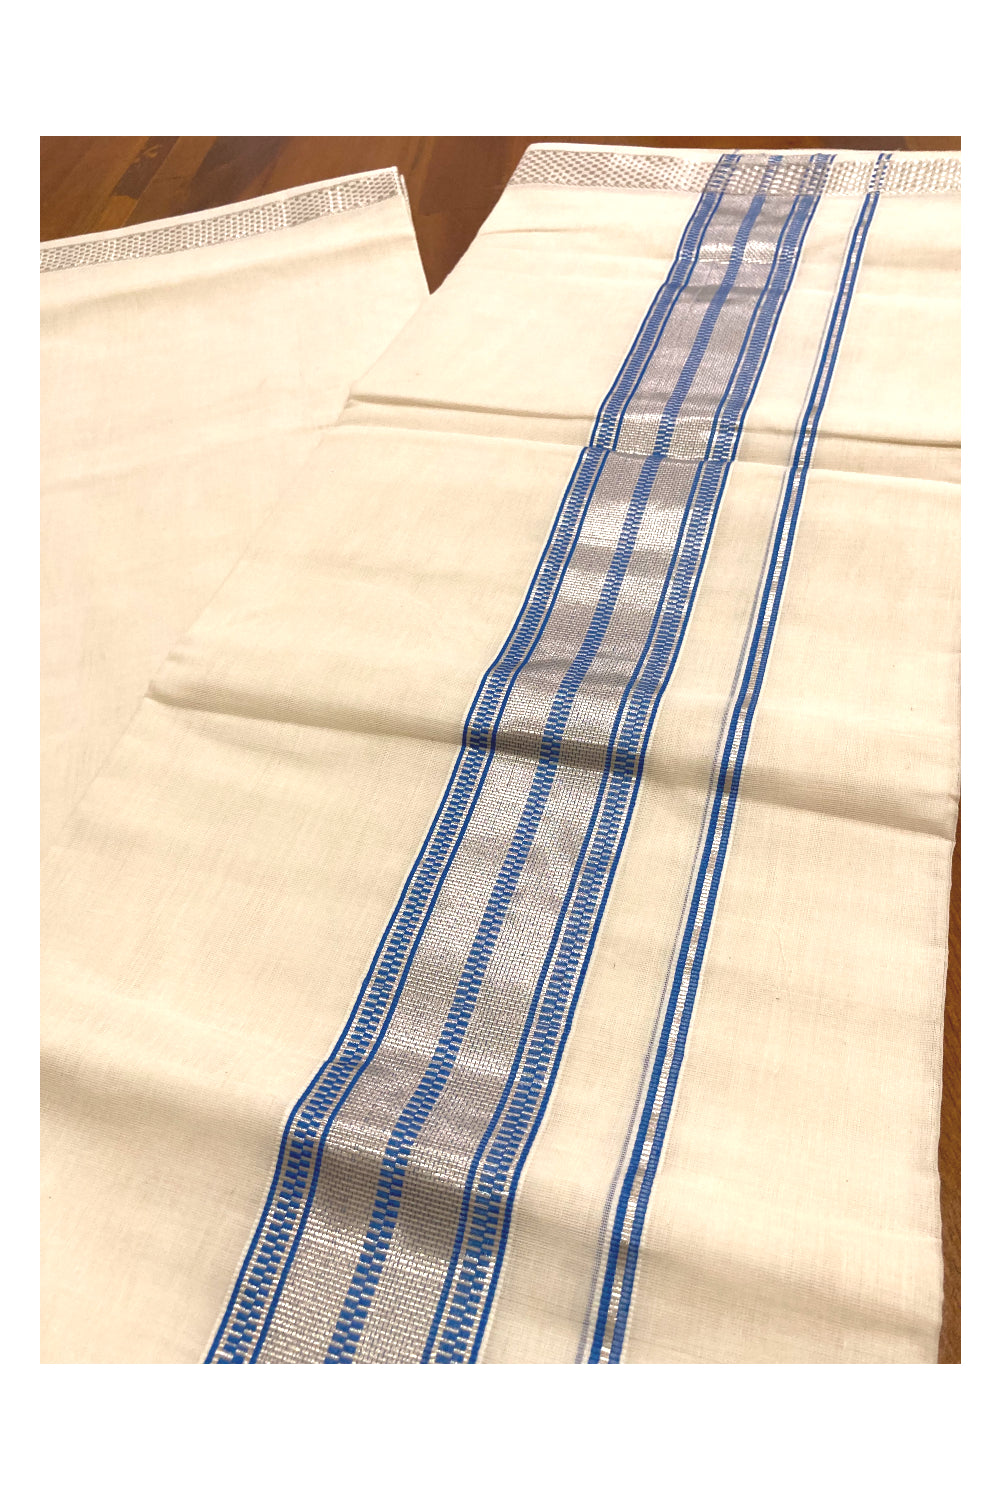 Southloom Premium Handloom Pure Cotton Mundu with Blue and Silver Kasavu Border (South Indian Dhoti)